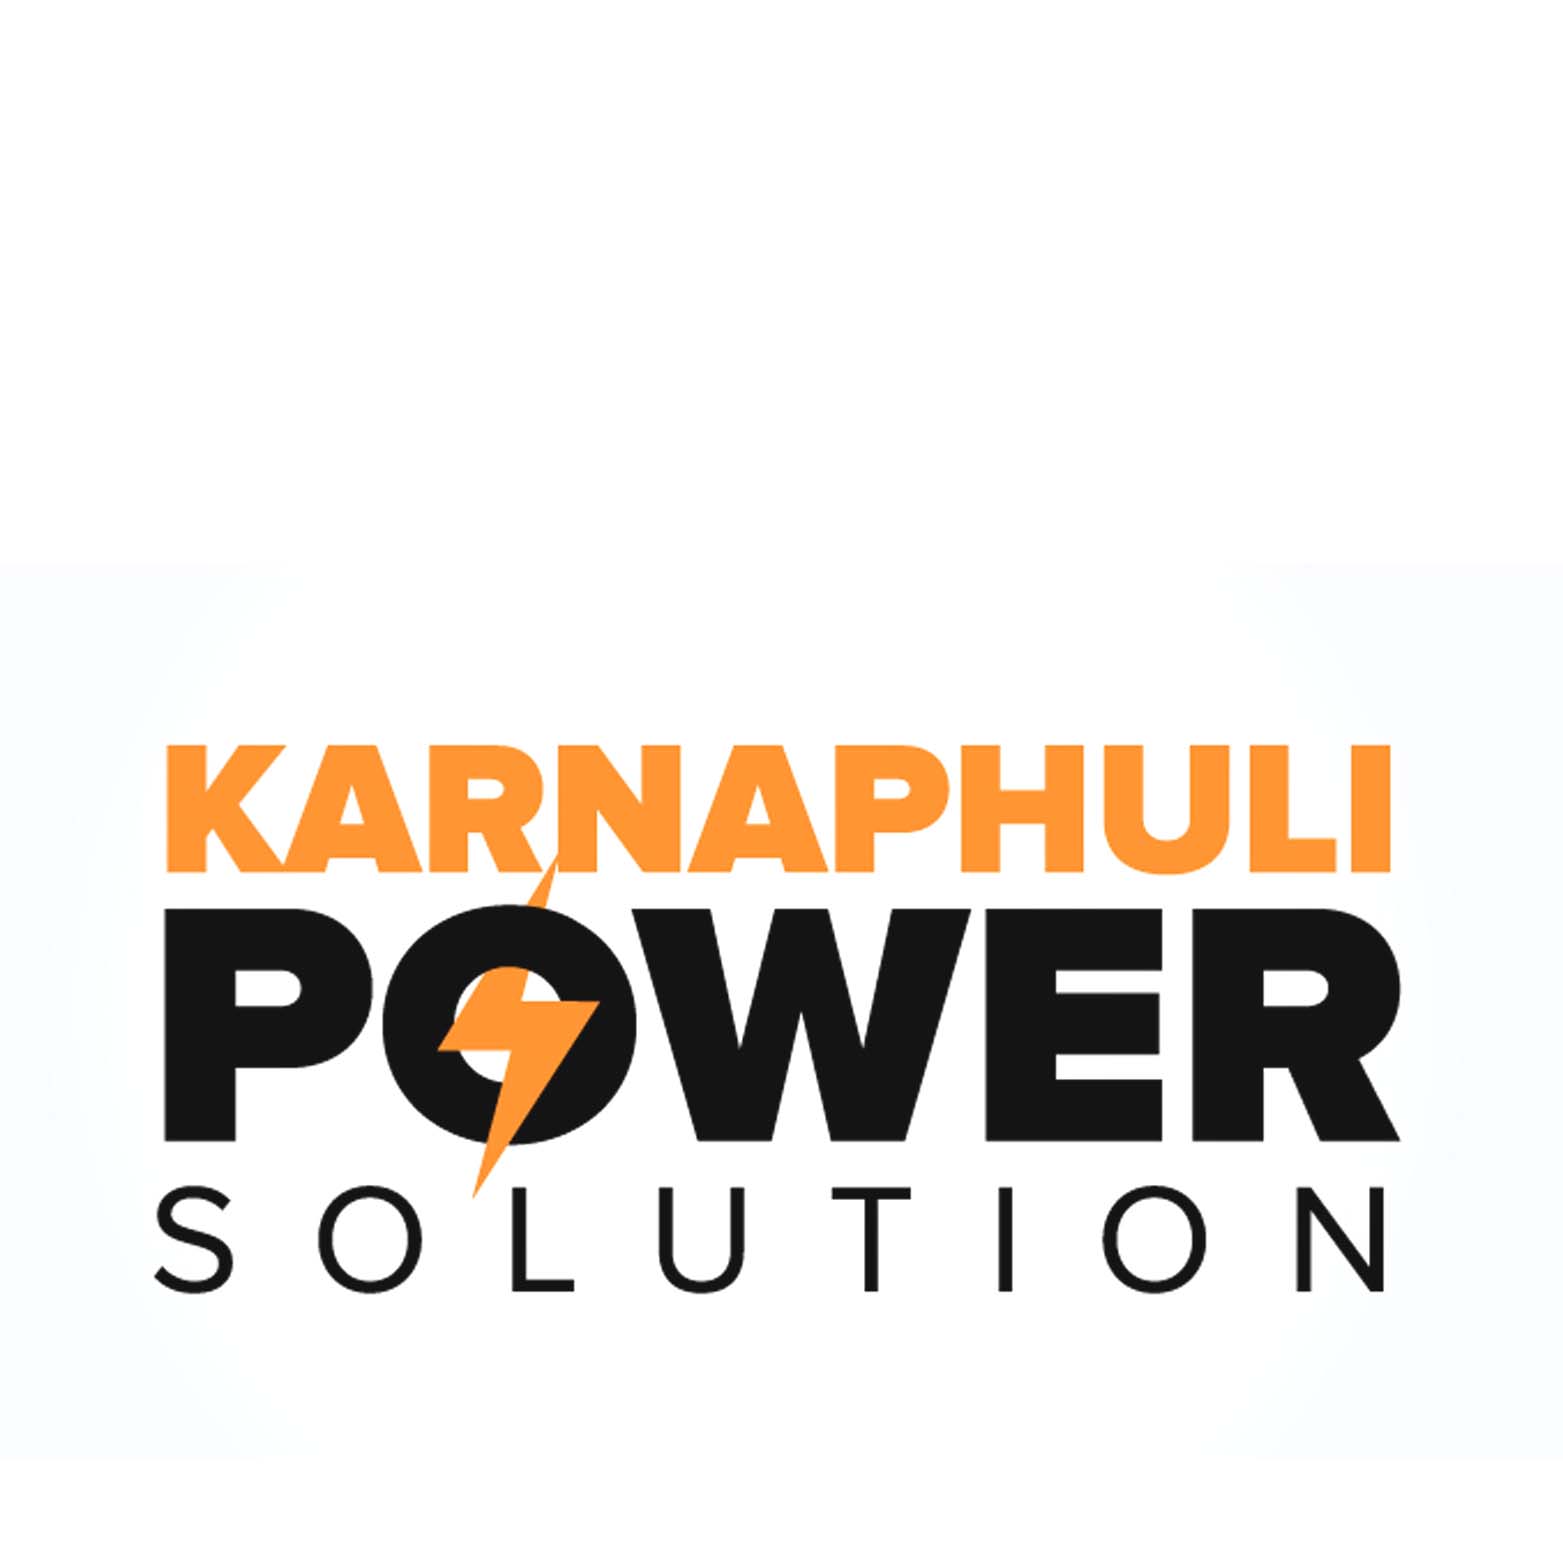 Karnaphuli Power Solution